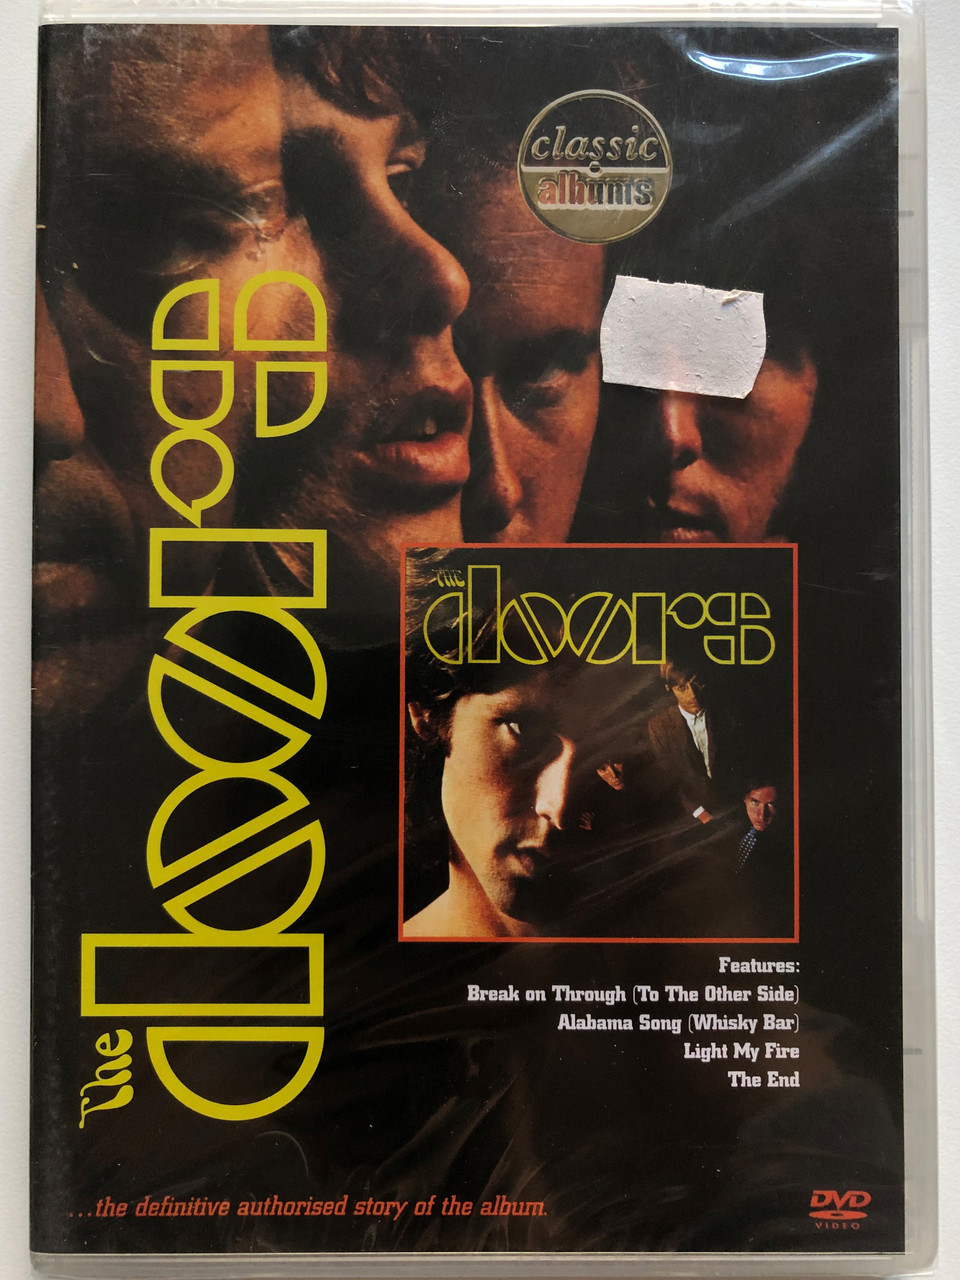 The Doors – The Doors / Eagle Vision DVD 2008 - bibleinmylanguage